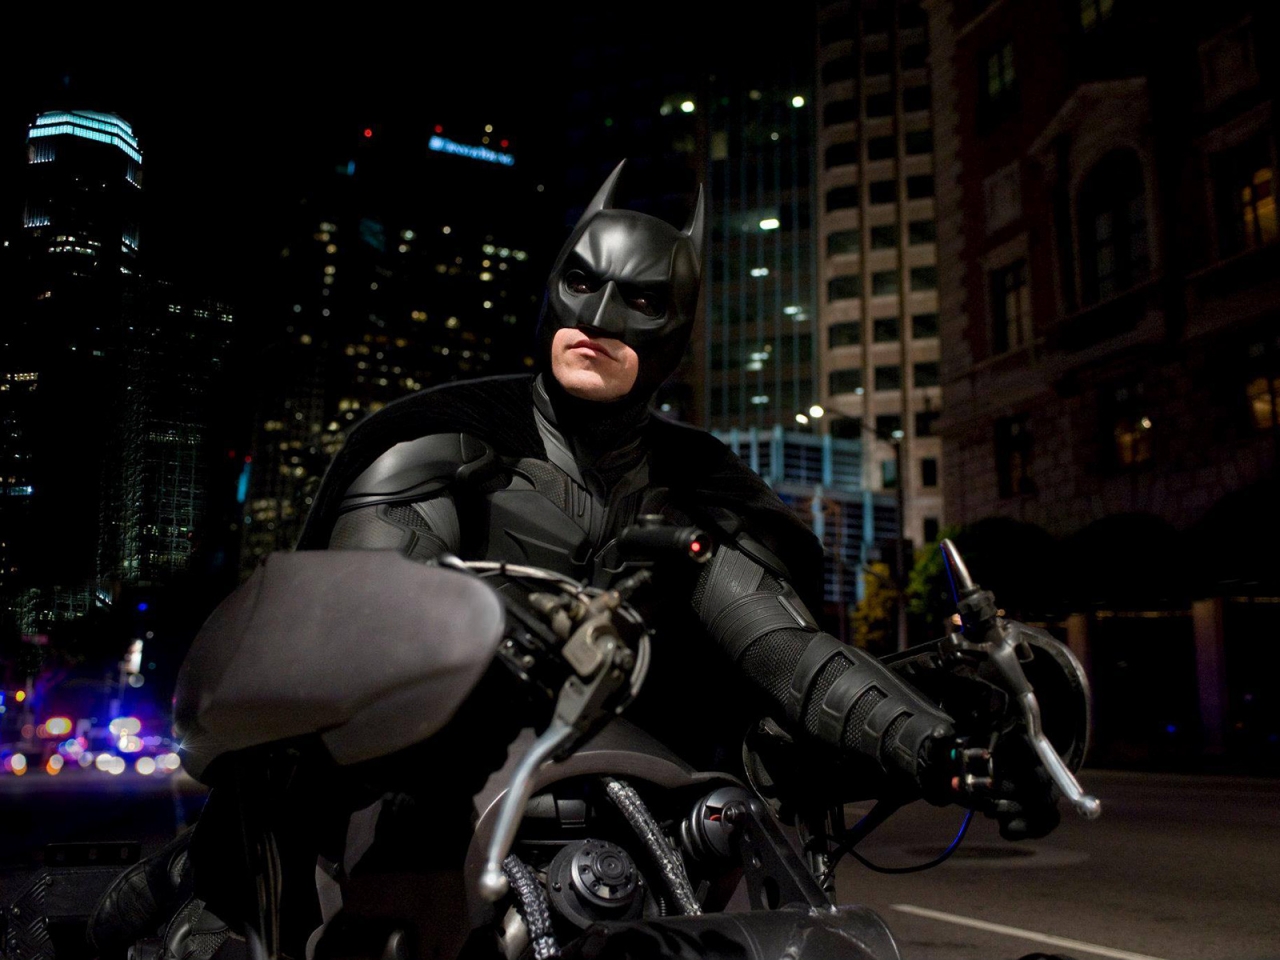 Batman on Bike for 1280 x 960 resolution